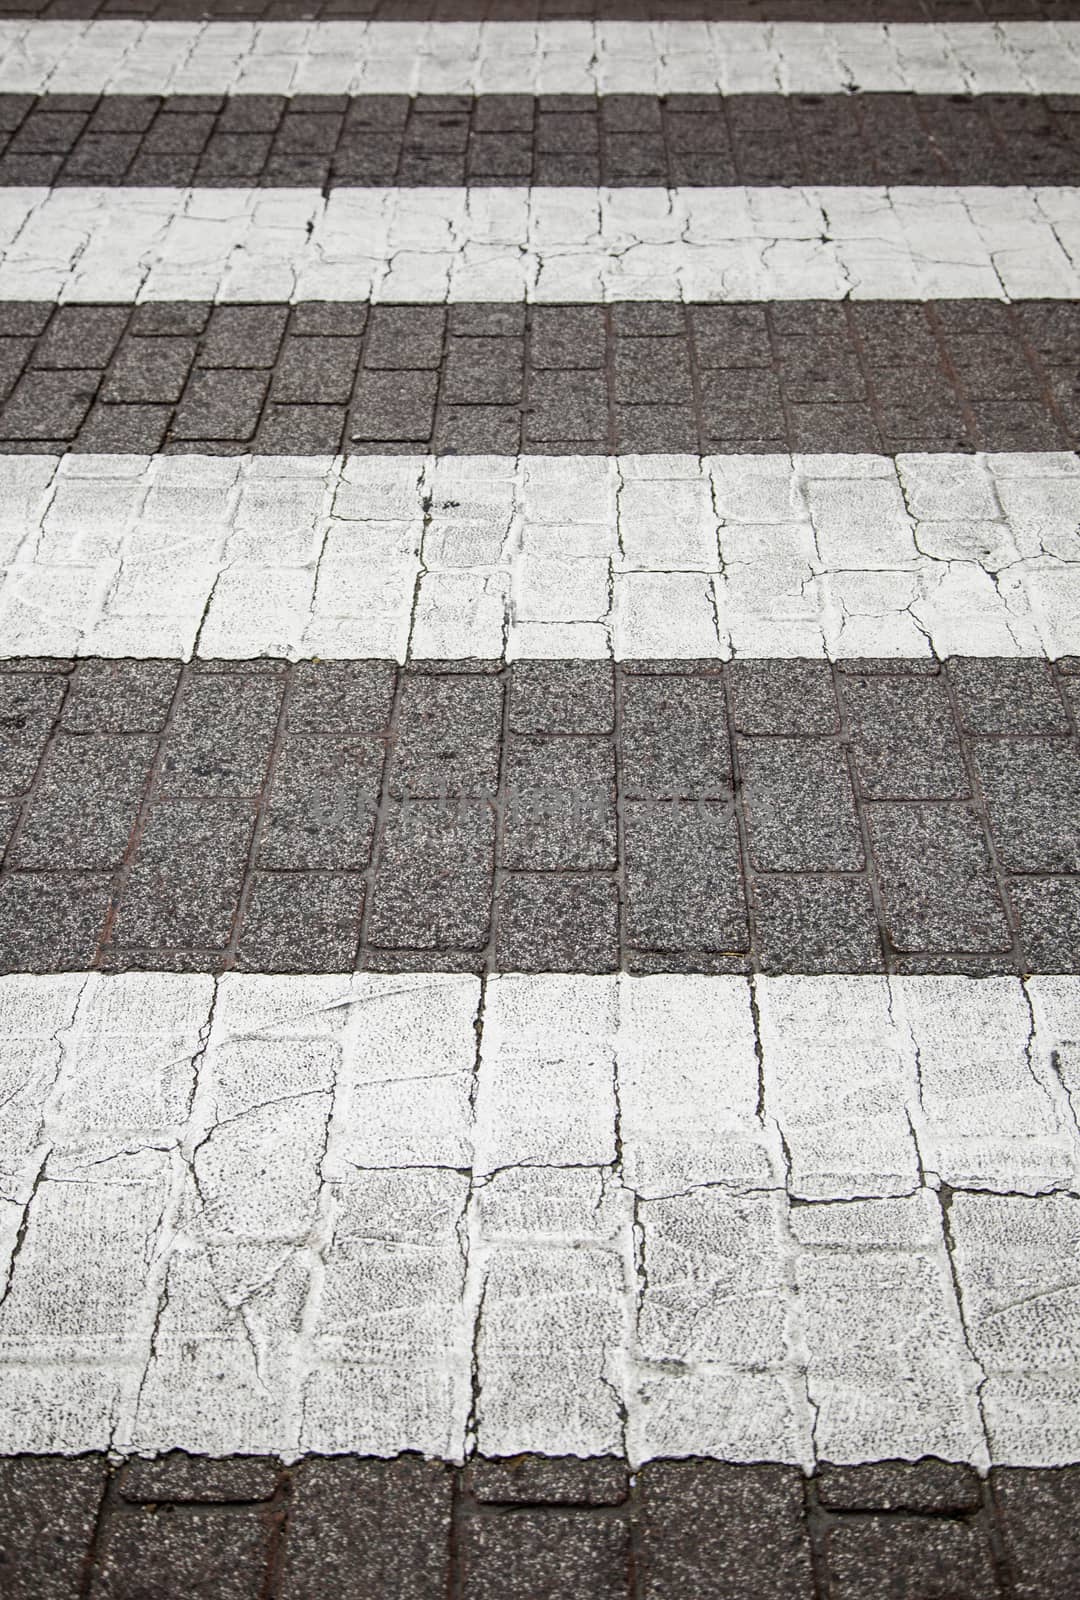 Zebra crossing for pedestrians, circulation signal detail